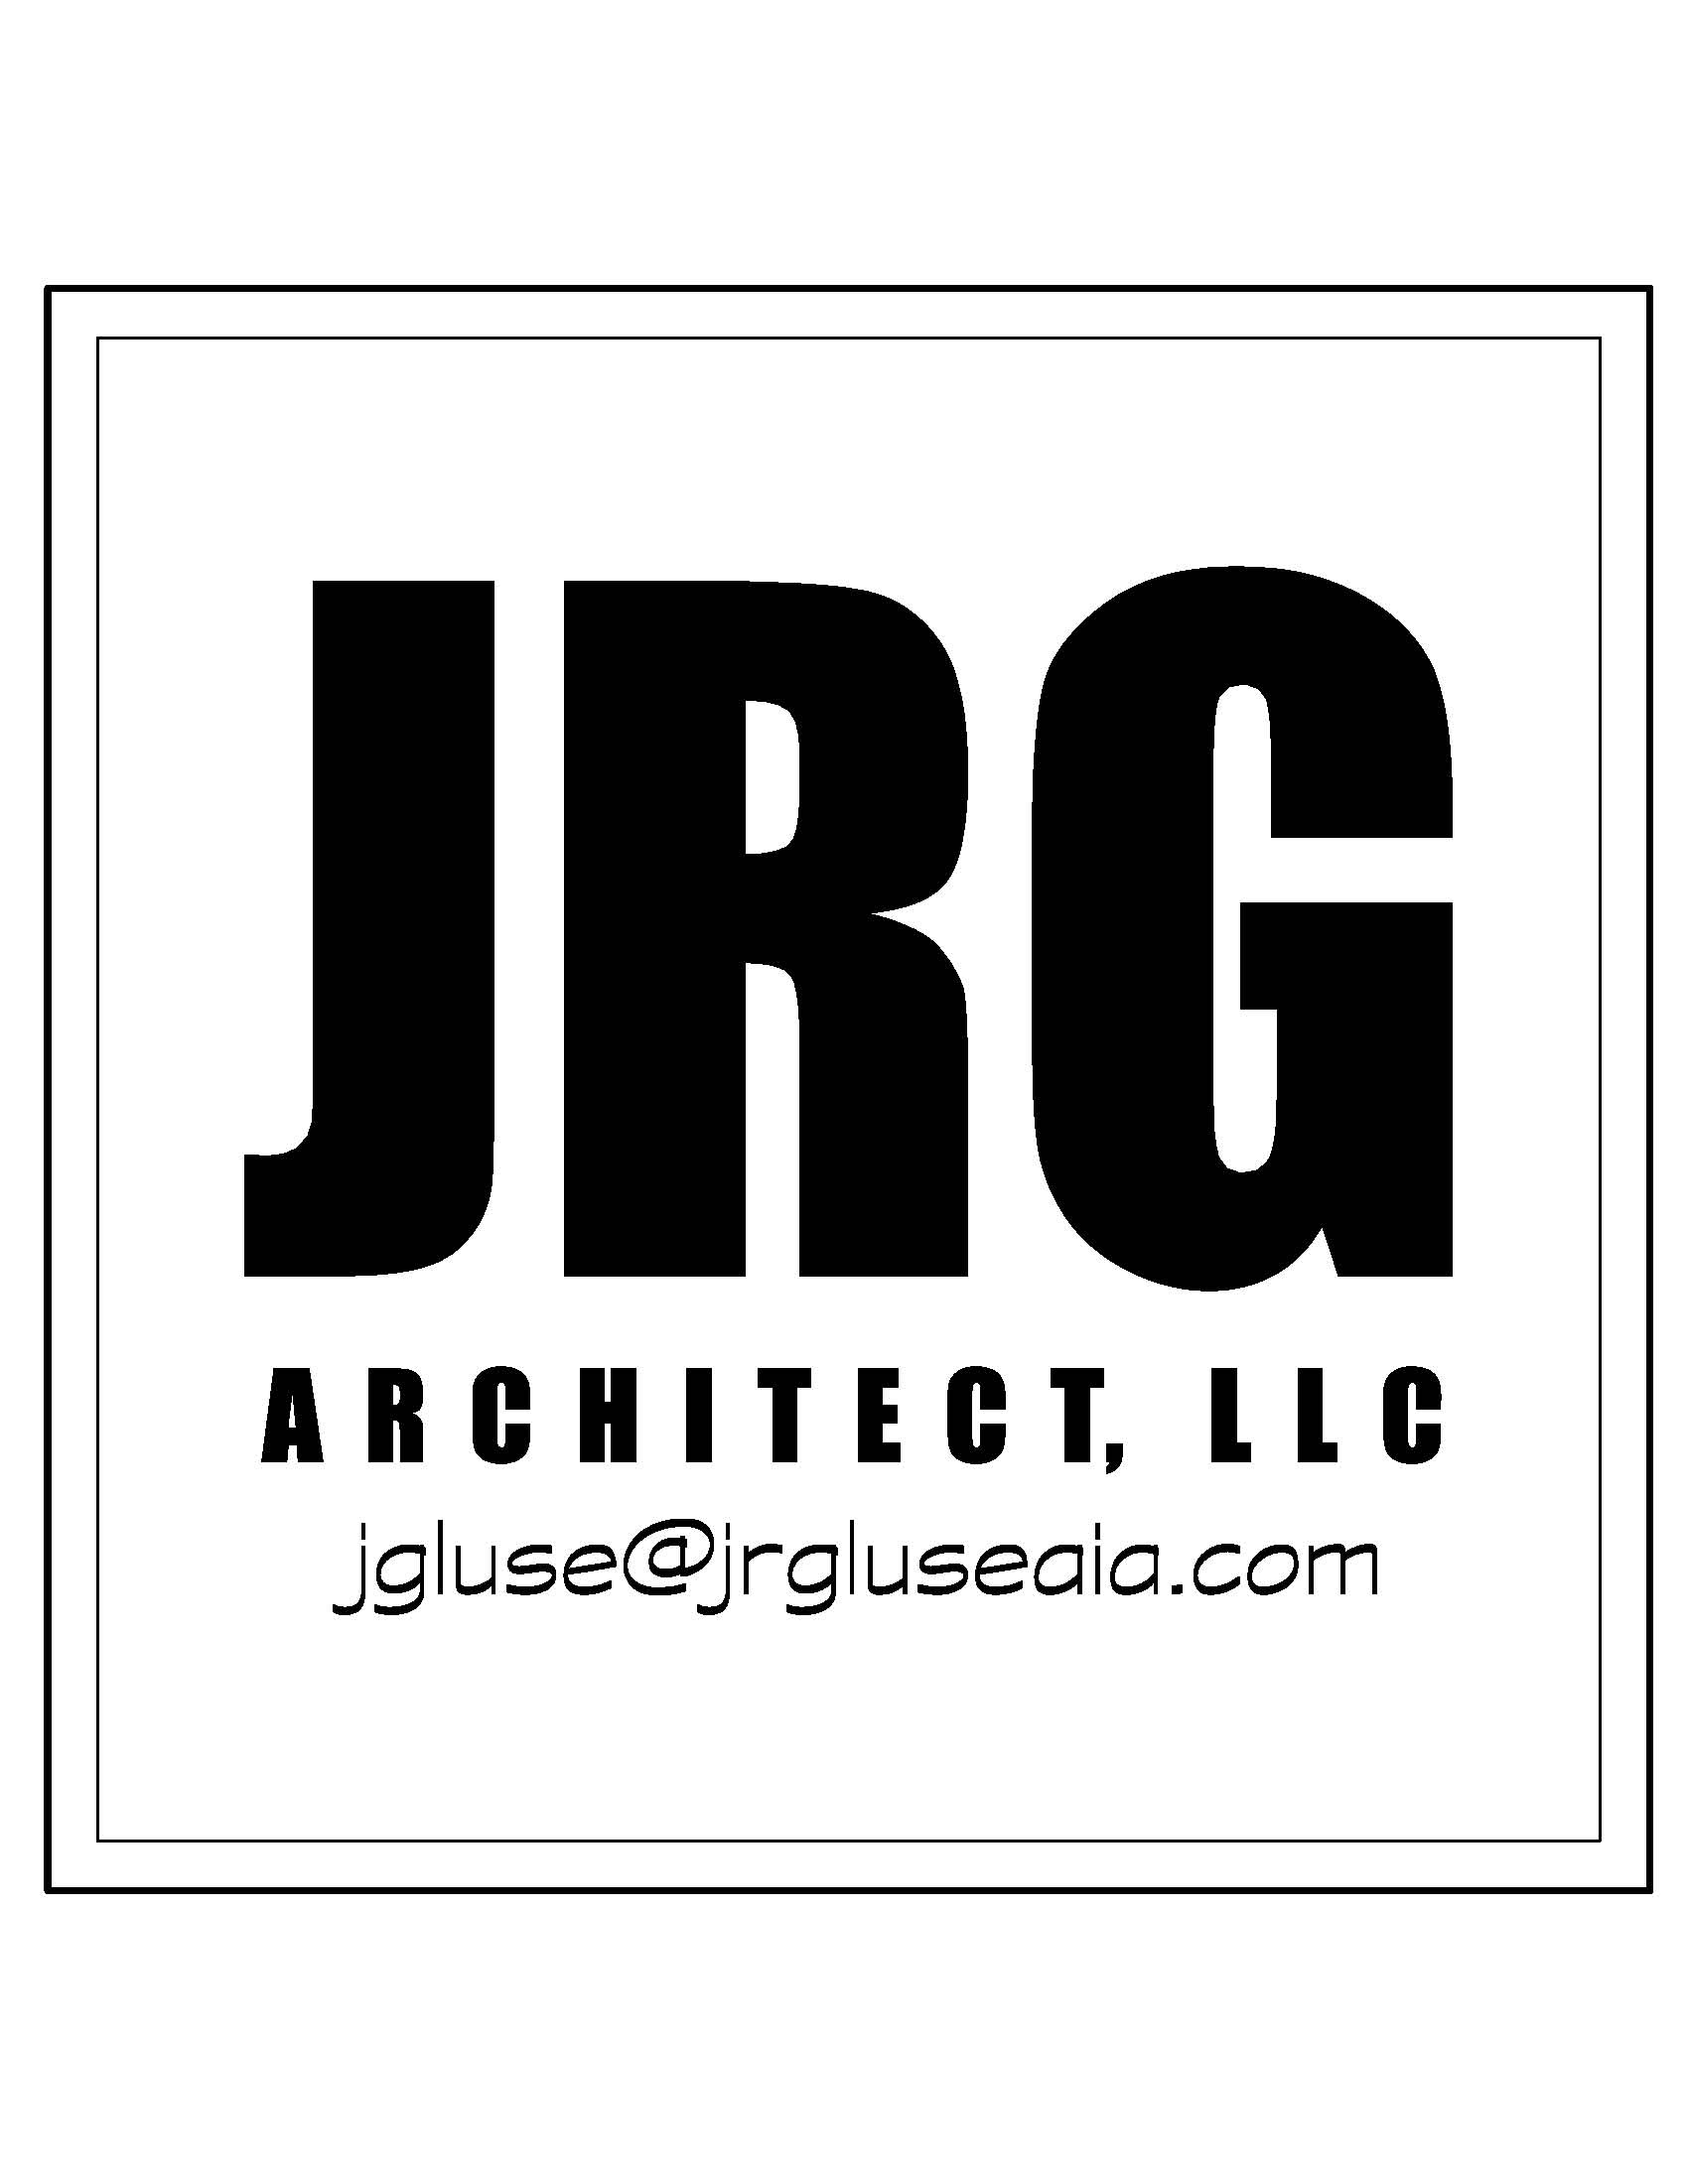 Joseph Robert Gluse Architect, LLC Logo